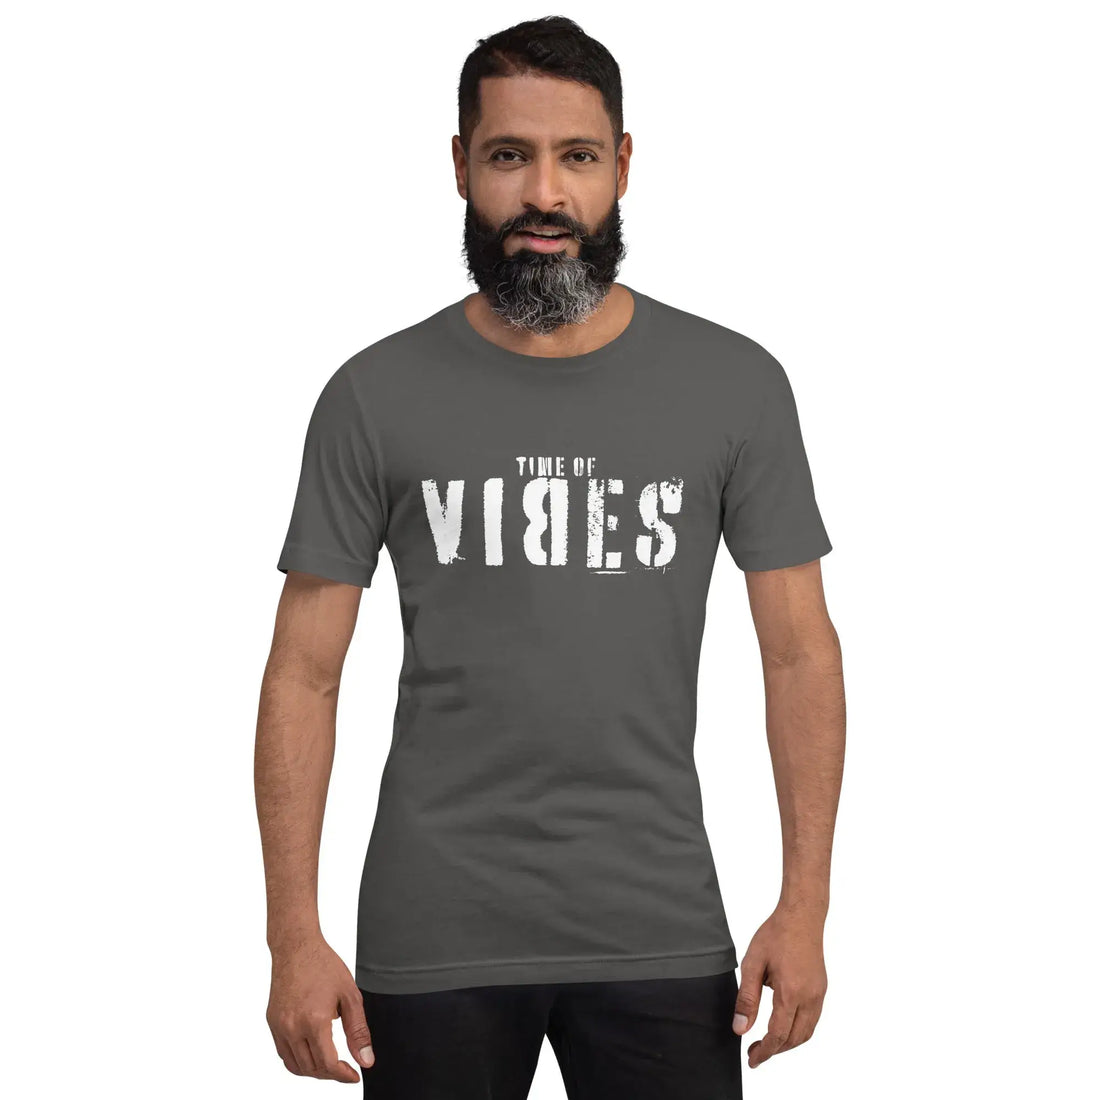 VIBES Herren Baumwoll T-Shirt (Grau/Weiß)